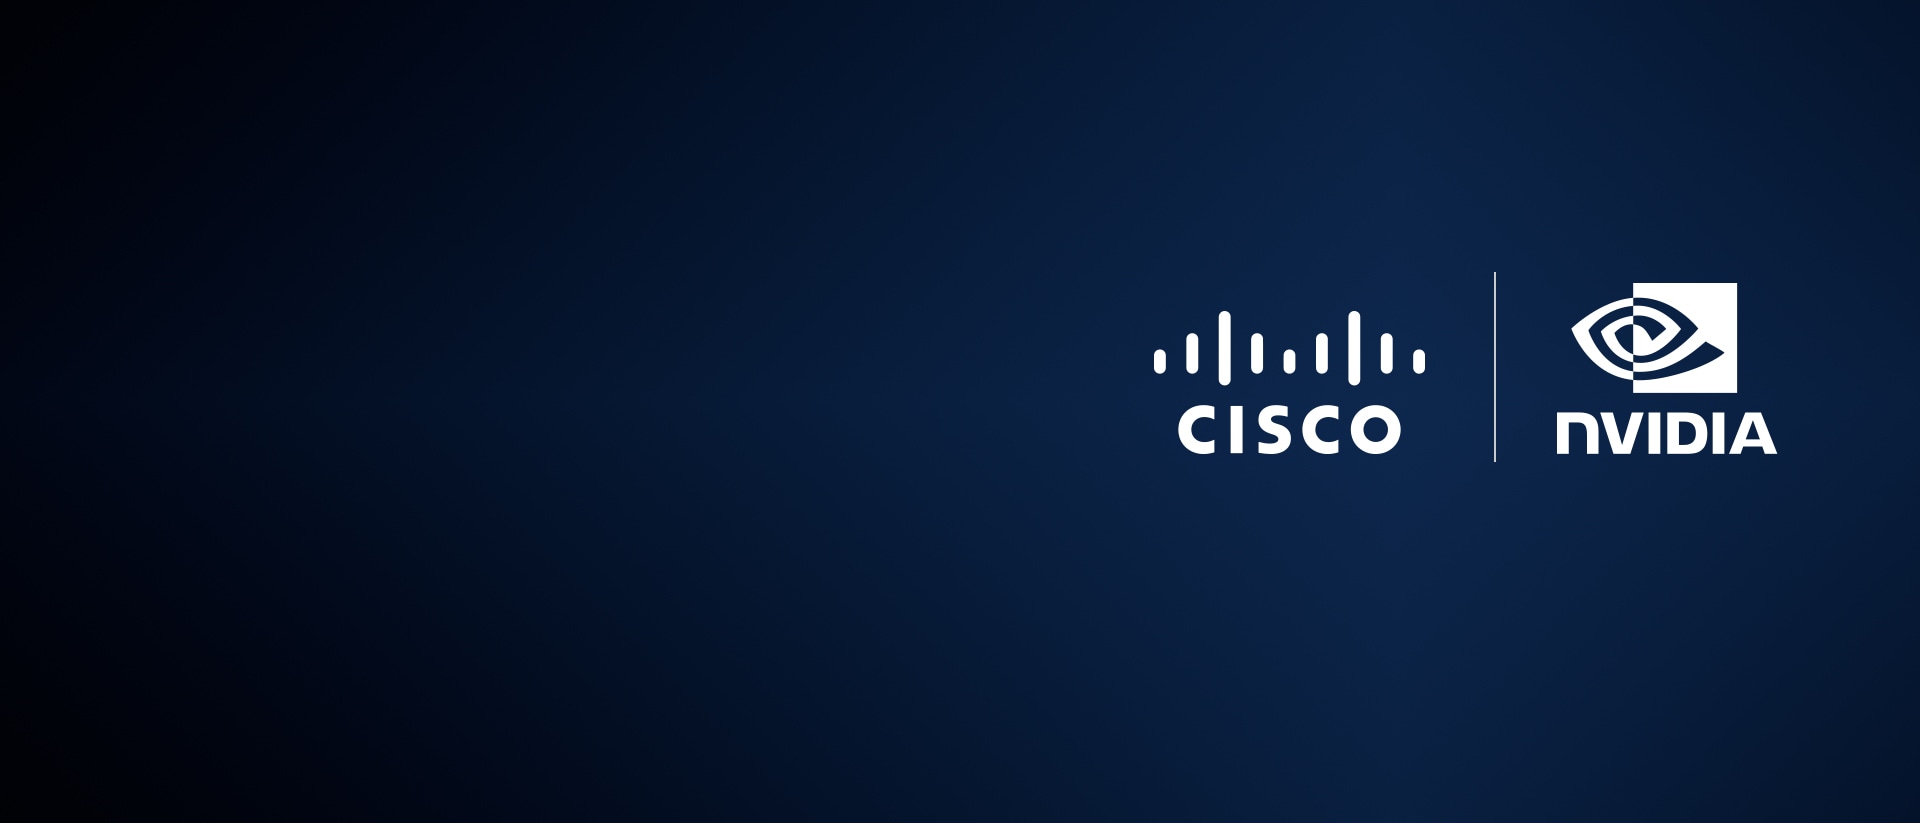 Cisco logo Nvidia logo